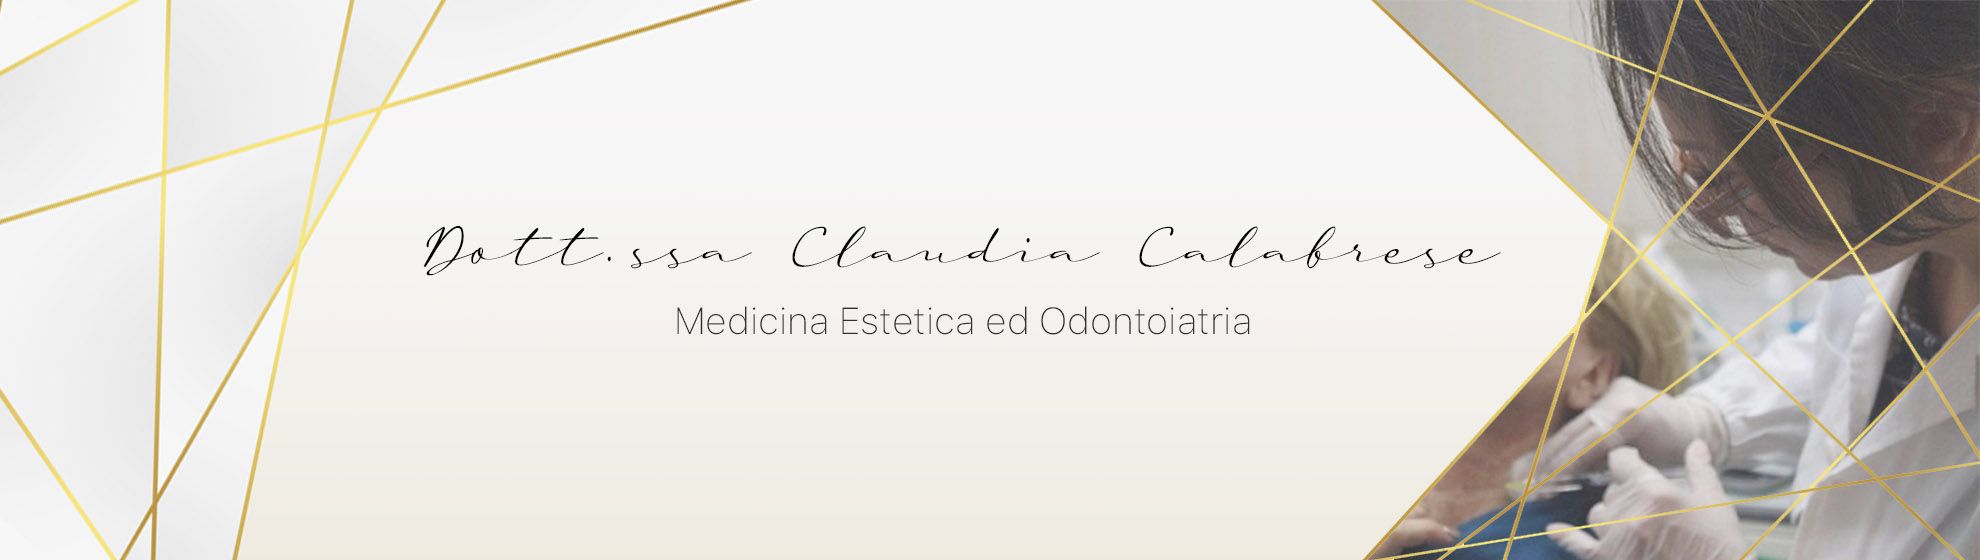 Dott.ssa Claudia Calabrese - Medicina Estetica ed Odontoiatria